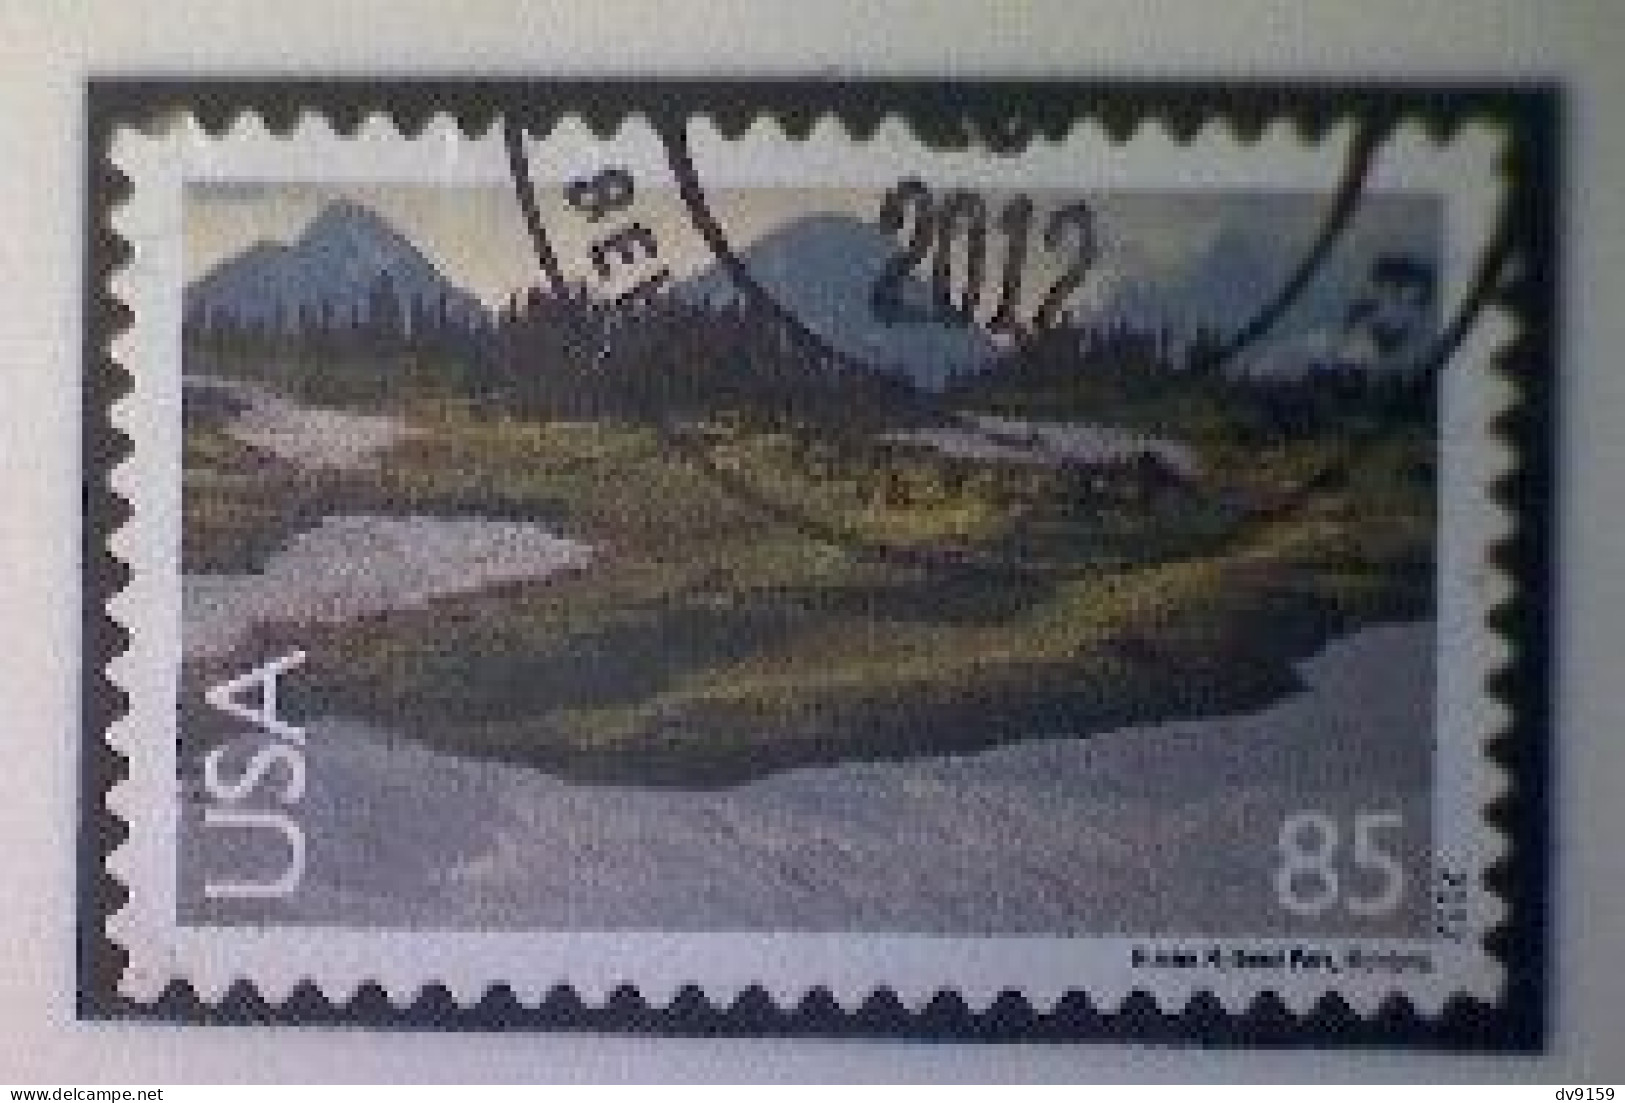 United States, Scott #C149, Used(o), 2012 Air Mail, Glacier Park, 85¢, Multicolored - Gebraucht